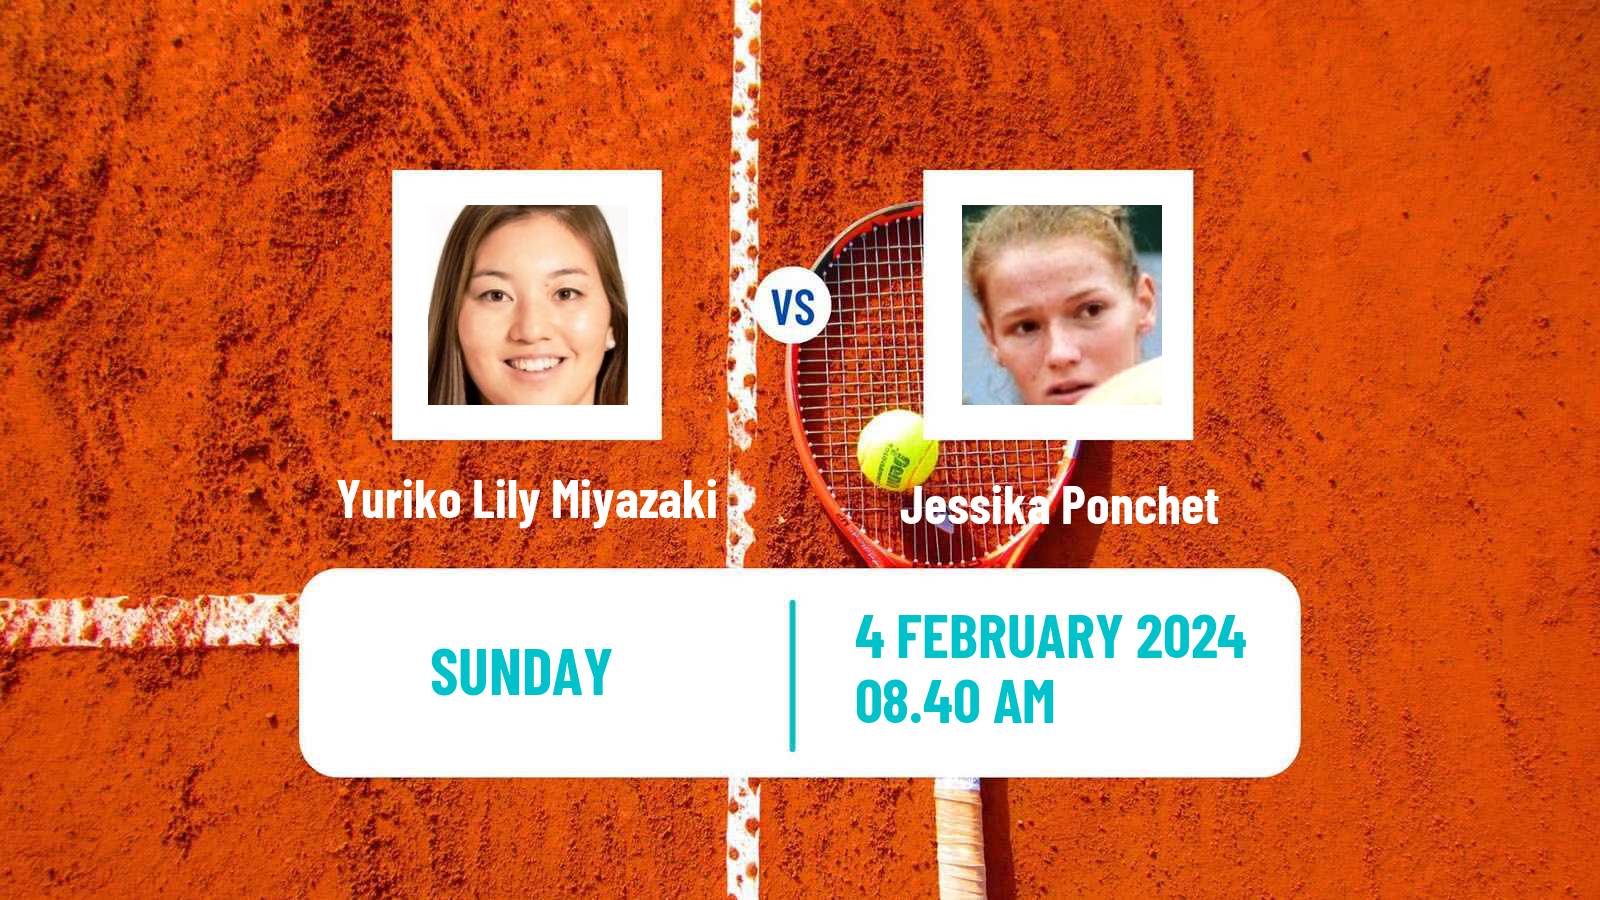 Tennis ITF W75 Andrezieux Boutheon Women Yuriko Lily Miyazaki - Jessika Ponchet